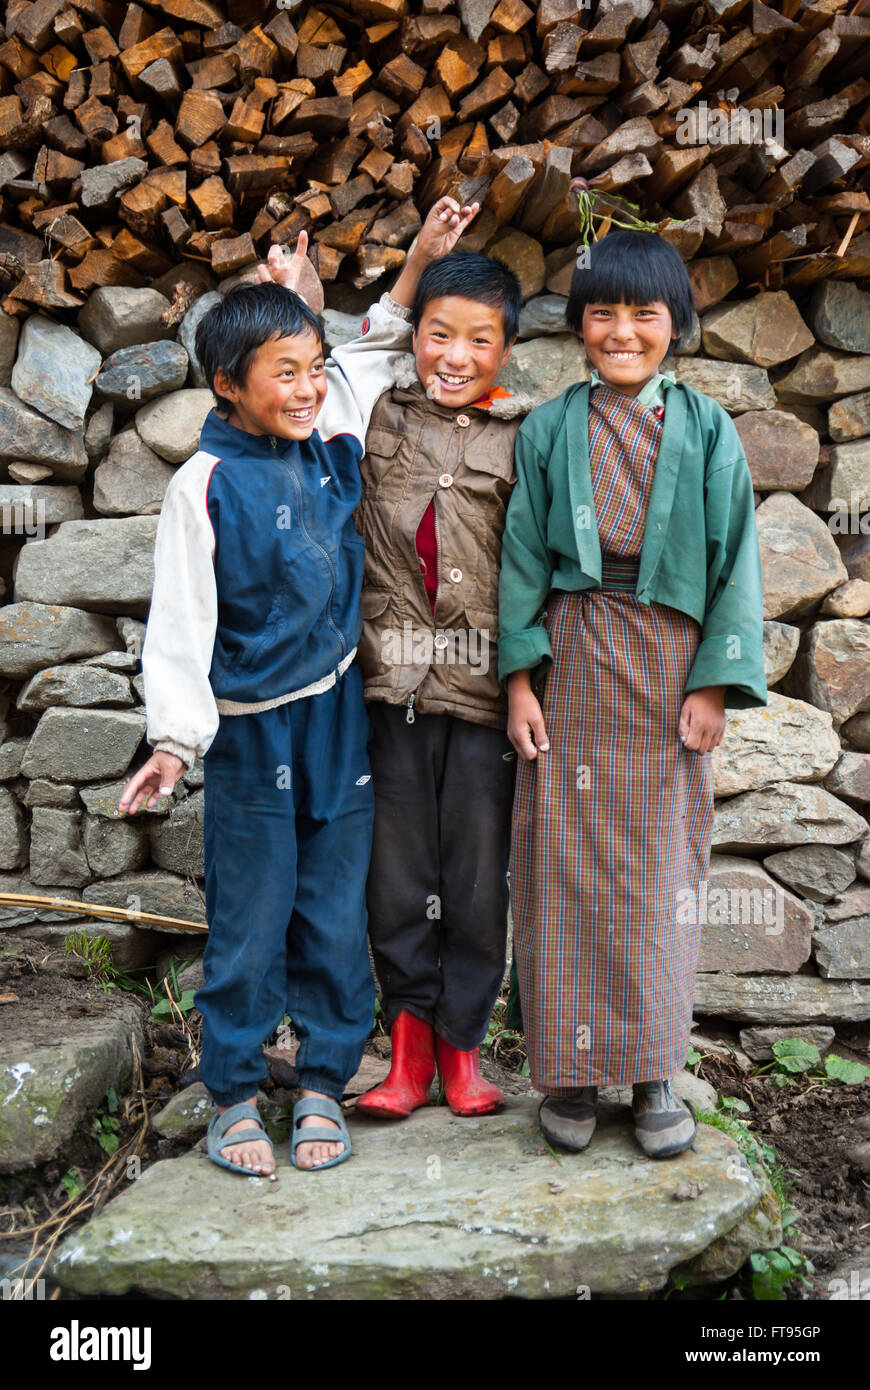 Three young Bhutanese children in Gophu Village, Phobjikha Valley, Bhutan Stock Photo